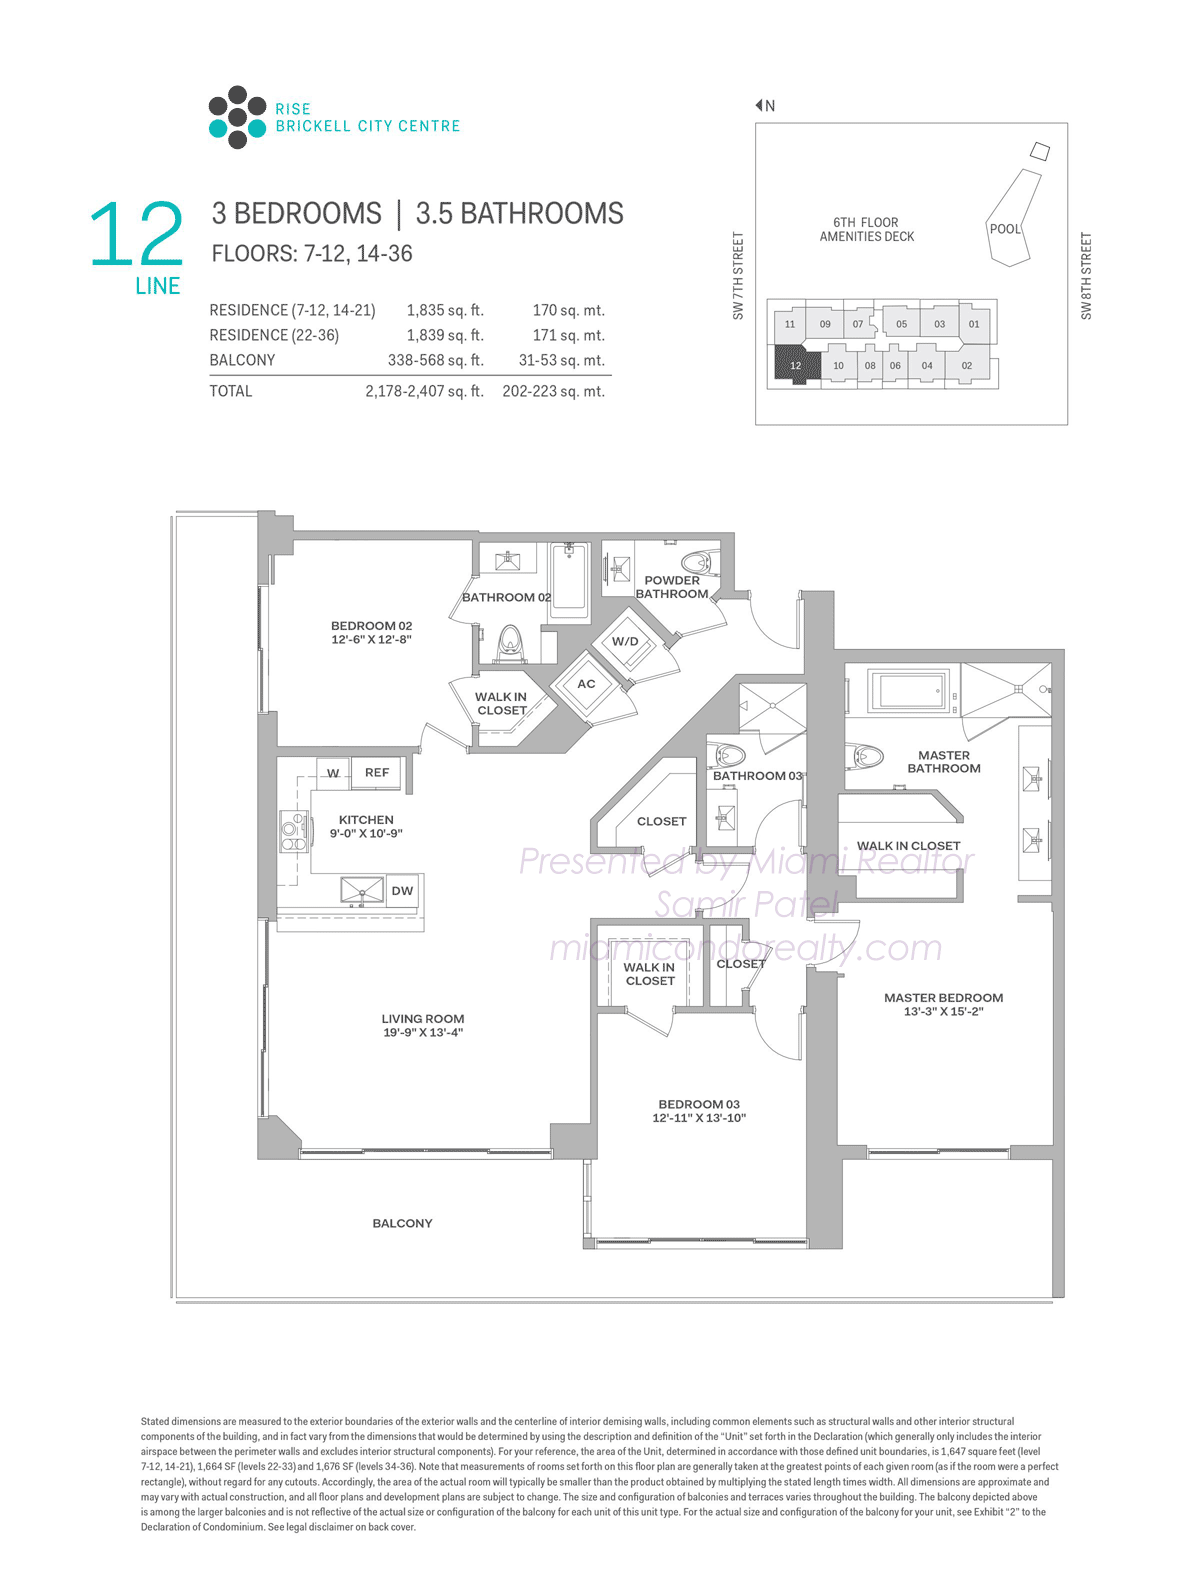 Rise at Brickell City Centre Residence 12 Floorplan